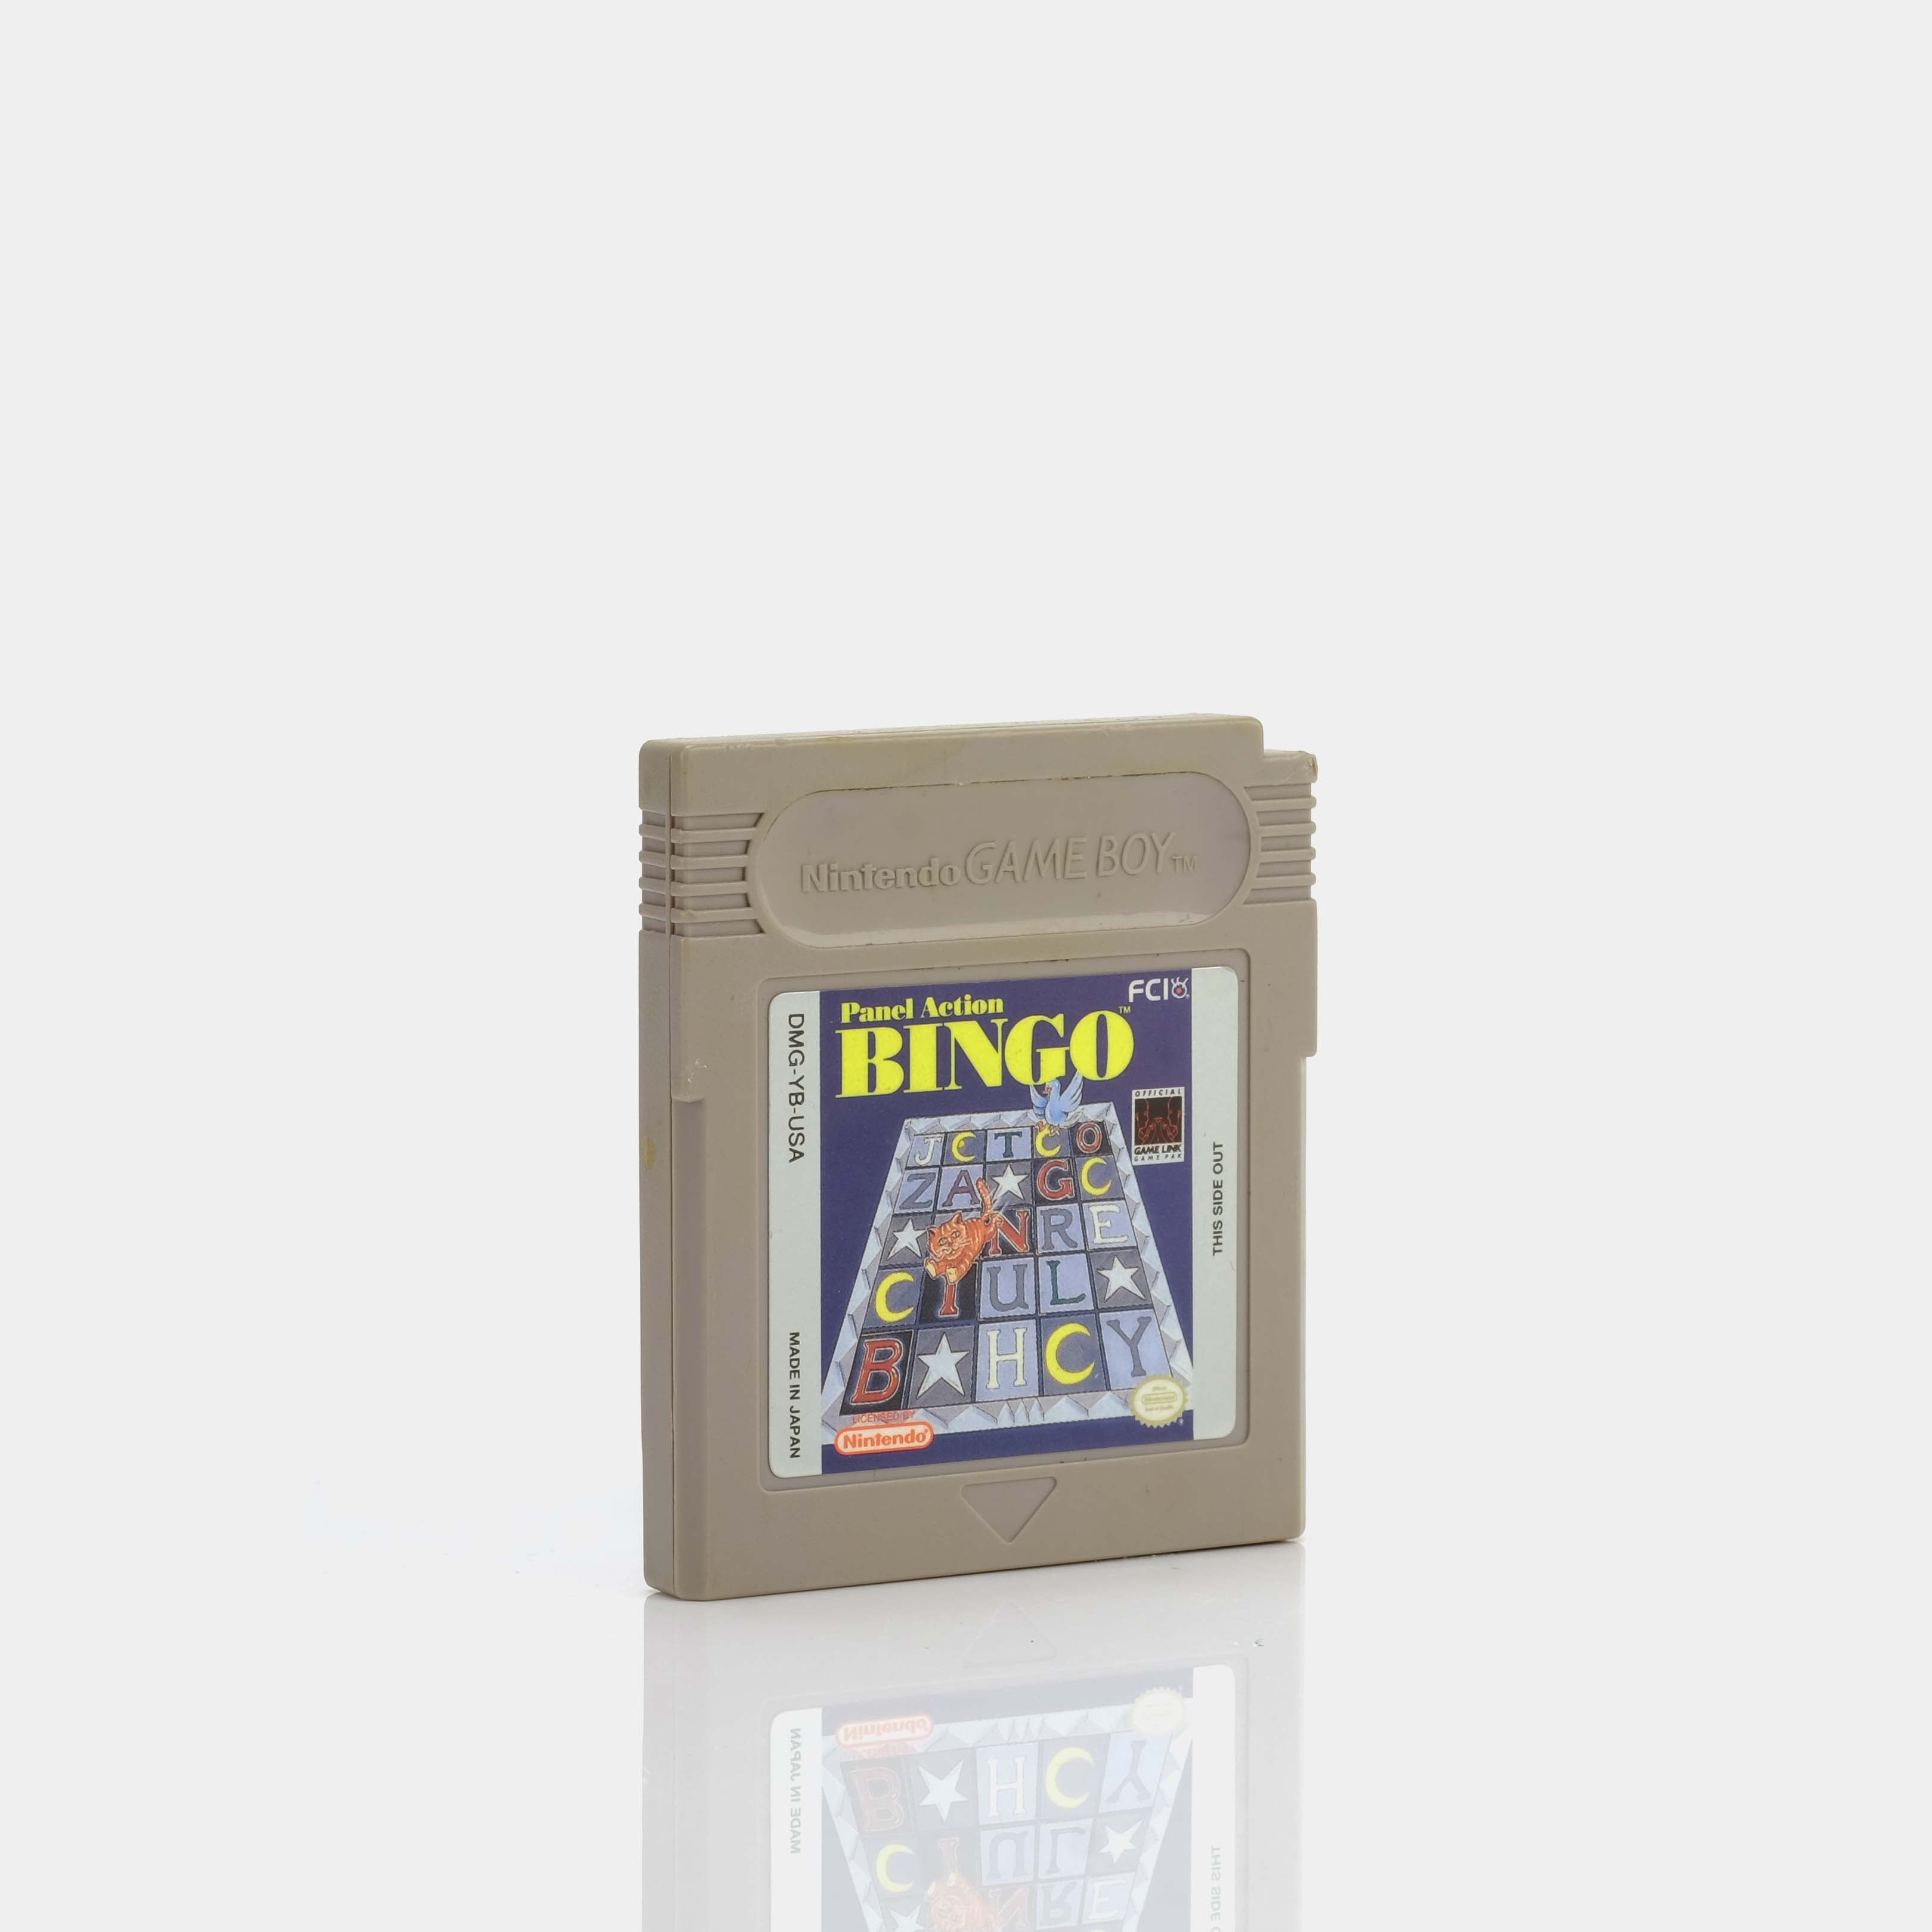 Panel Action Bingo (1993) Game Boy Game